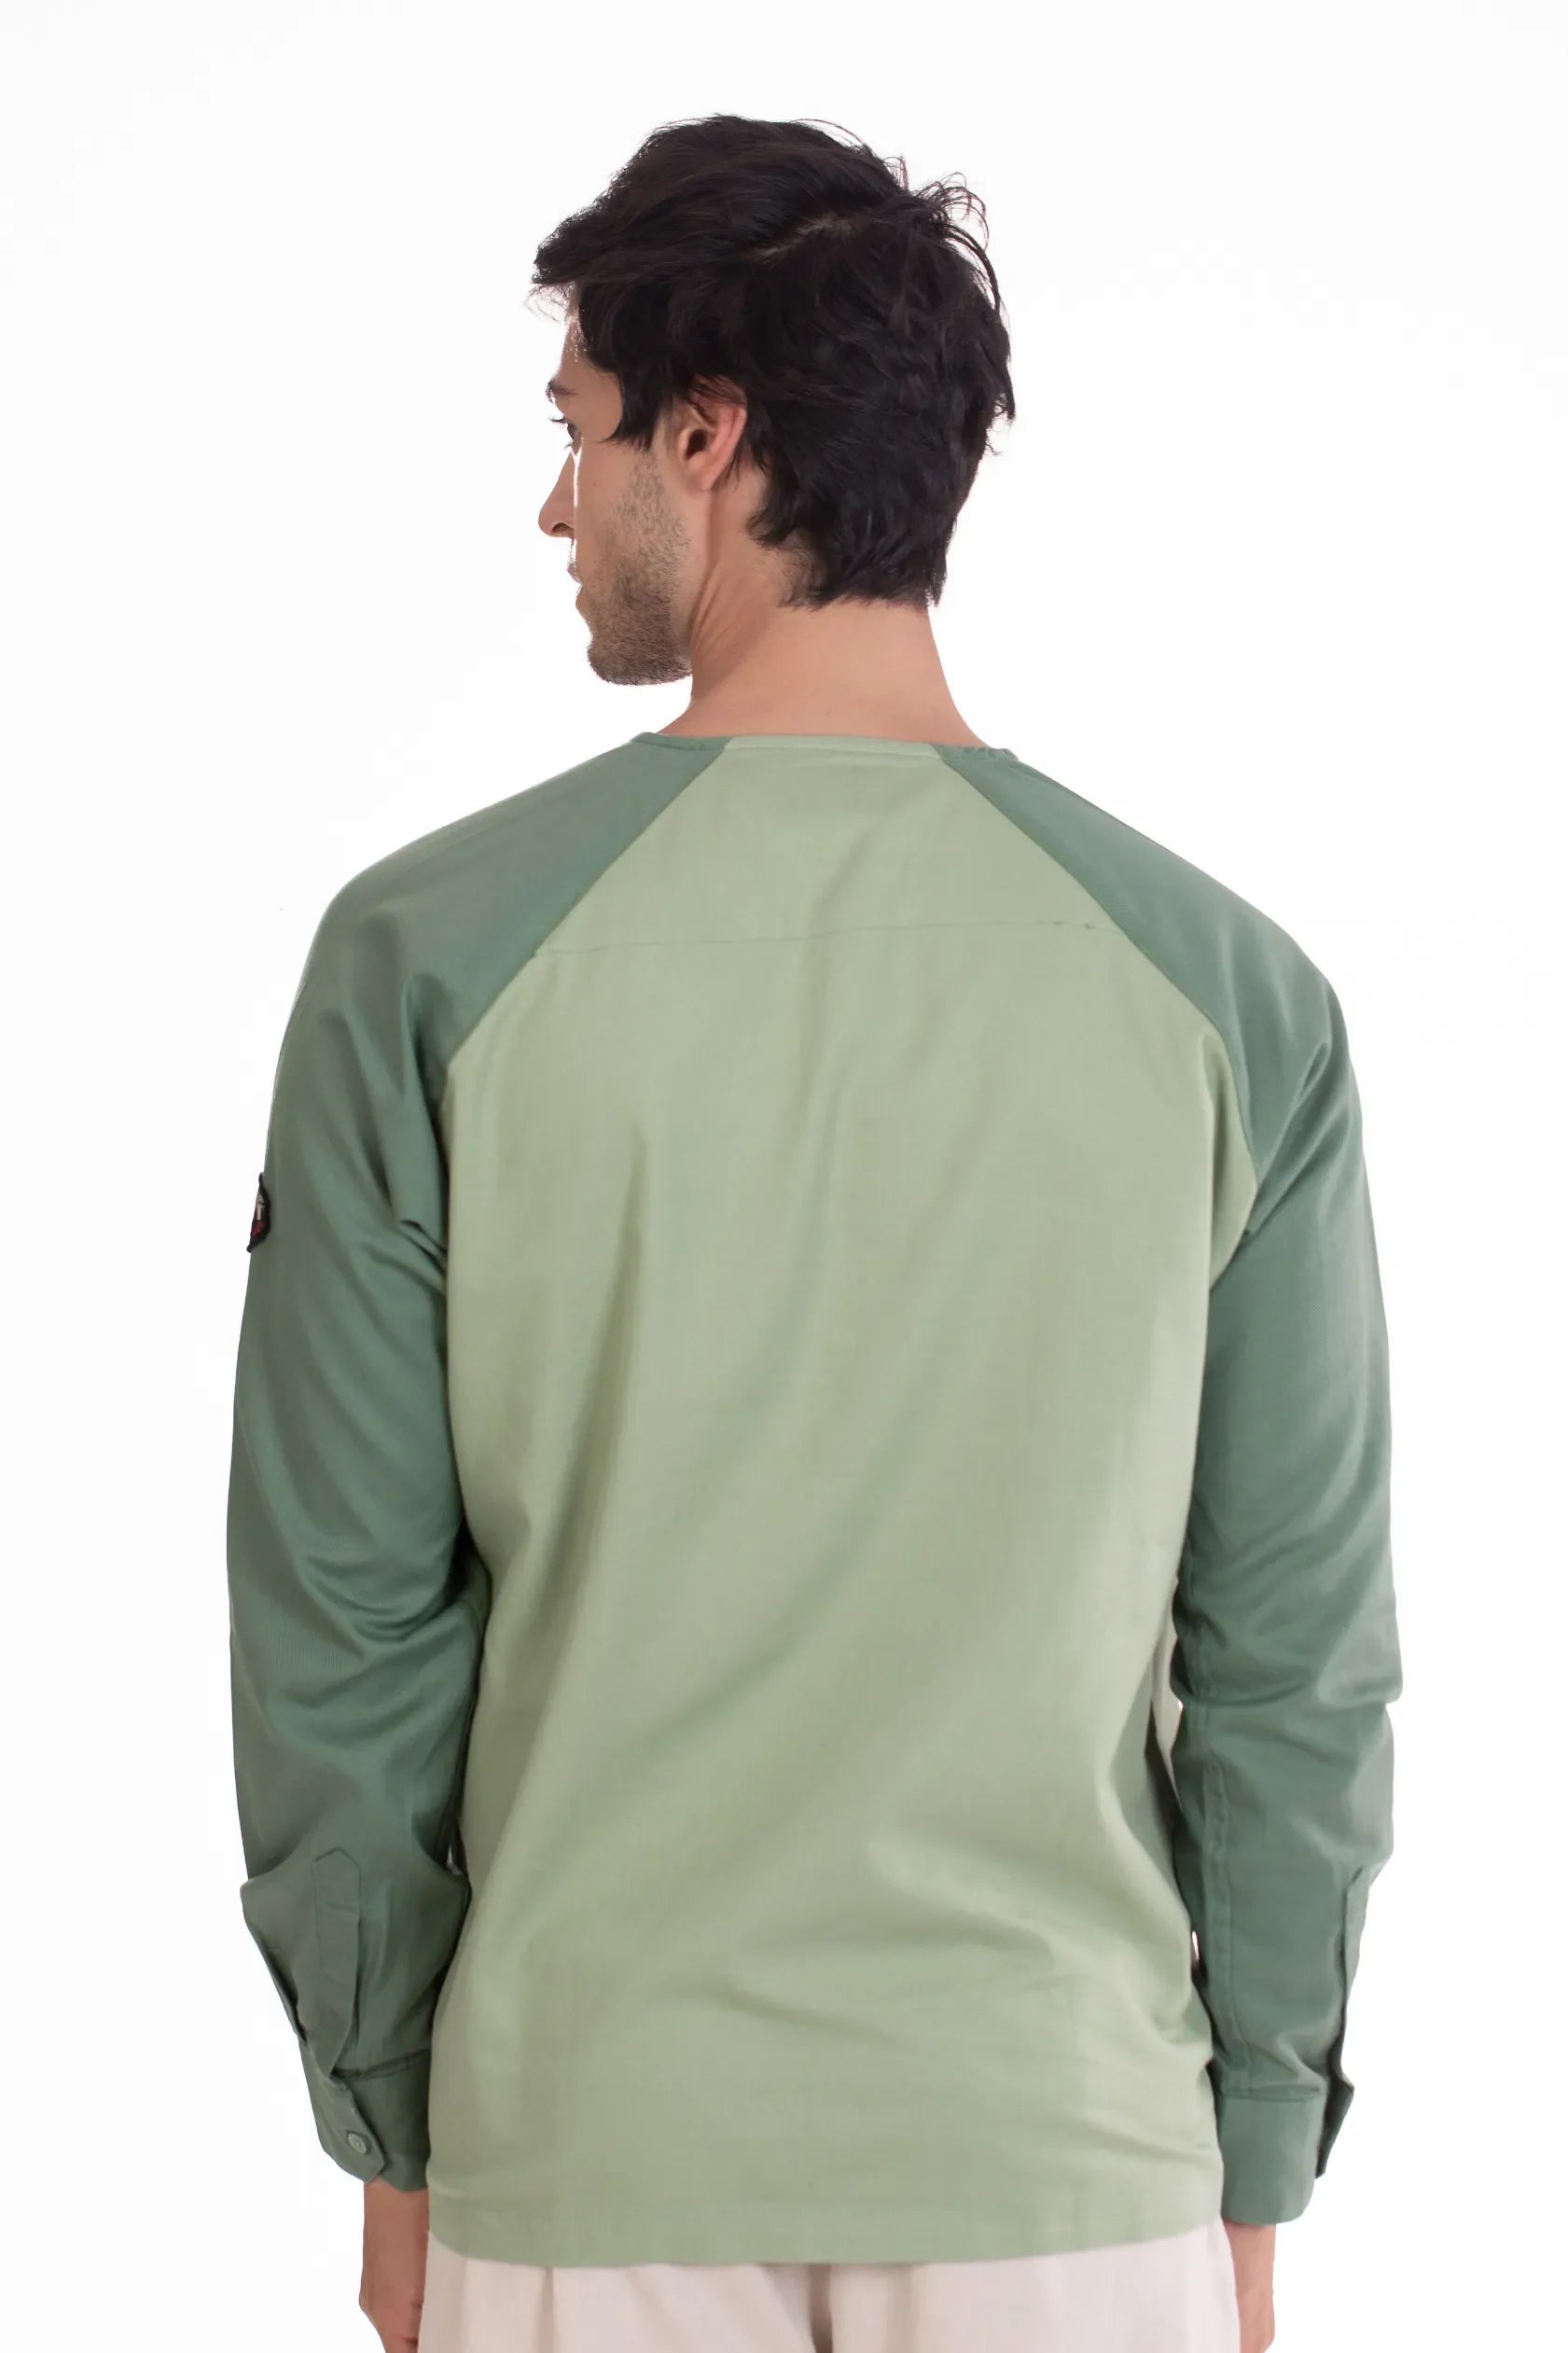 Buy Raglan Full Sleeve Shirt Online.